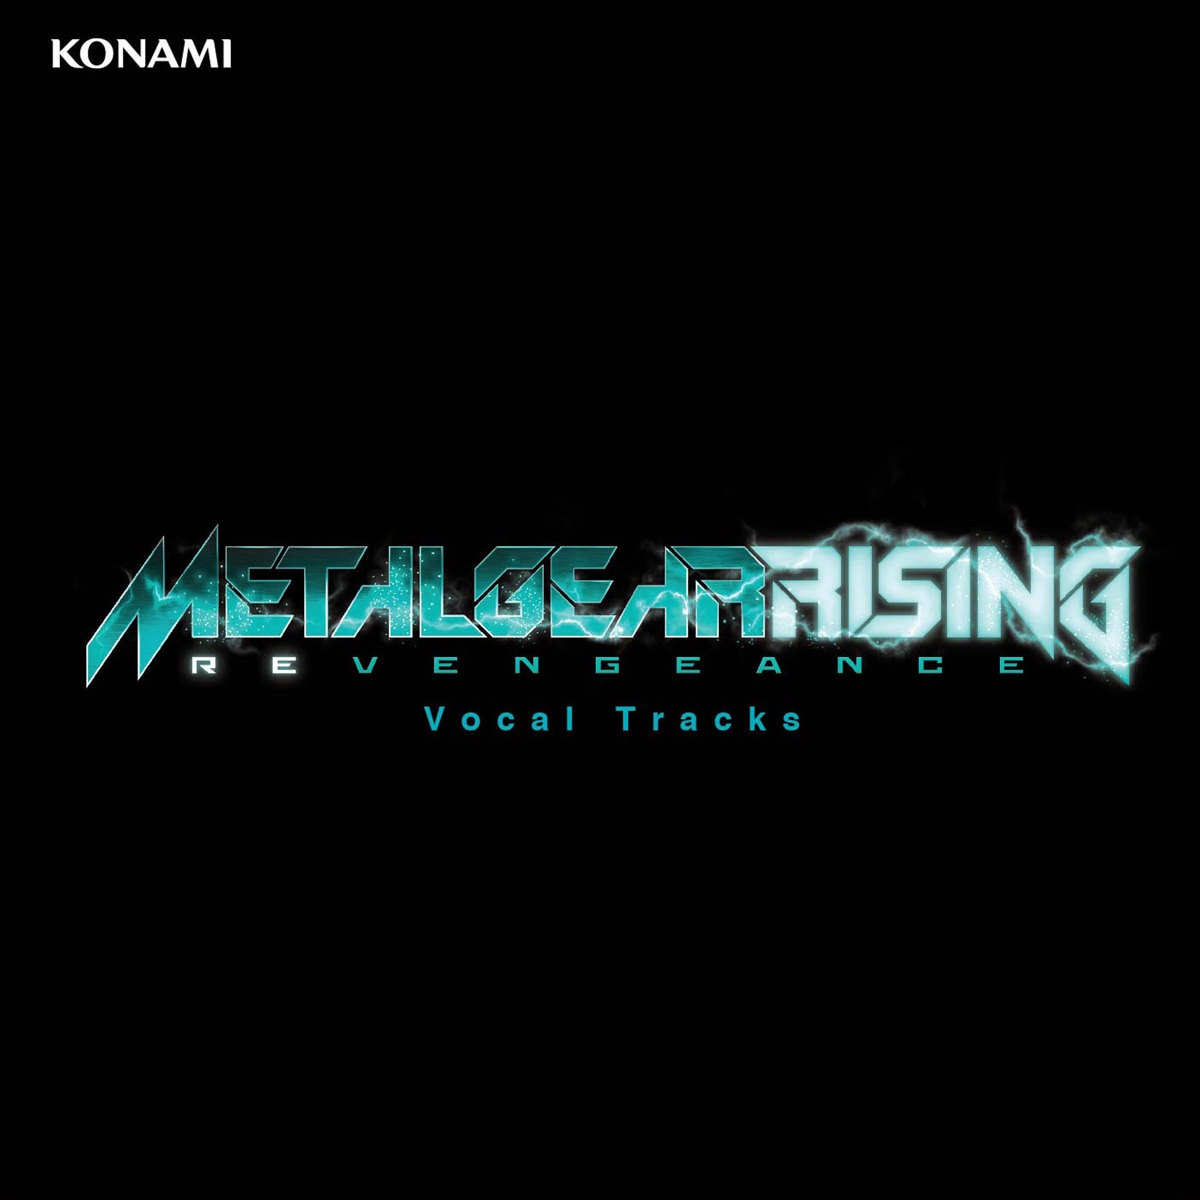 Metal Gear Rising: Revengeance Vocal Tracks as Extra Music Options (29 Music Tracks!)